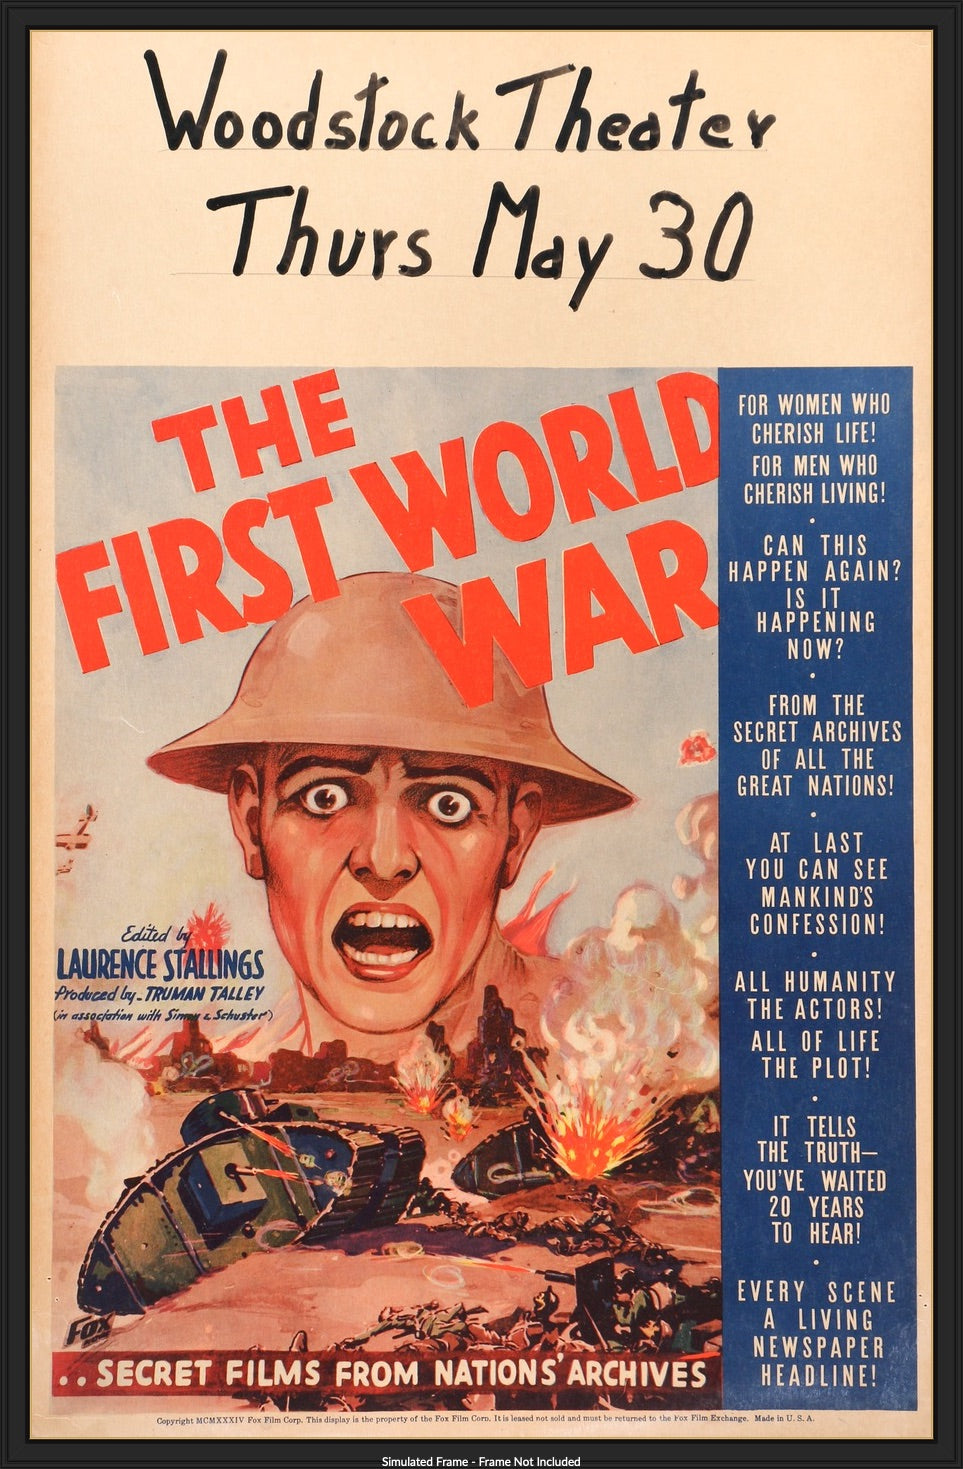 First World War (1934) original movie poster for sale at Original Film Art